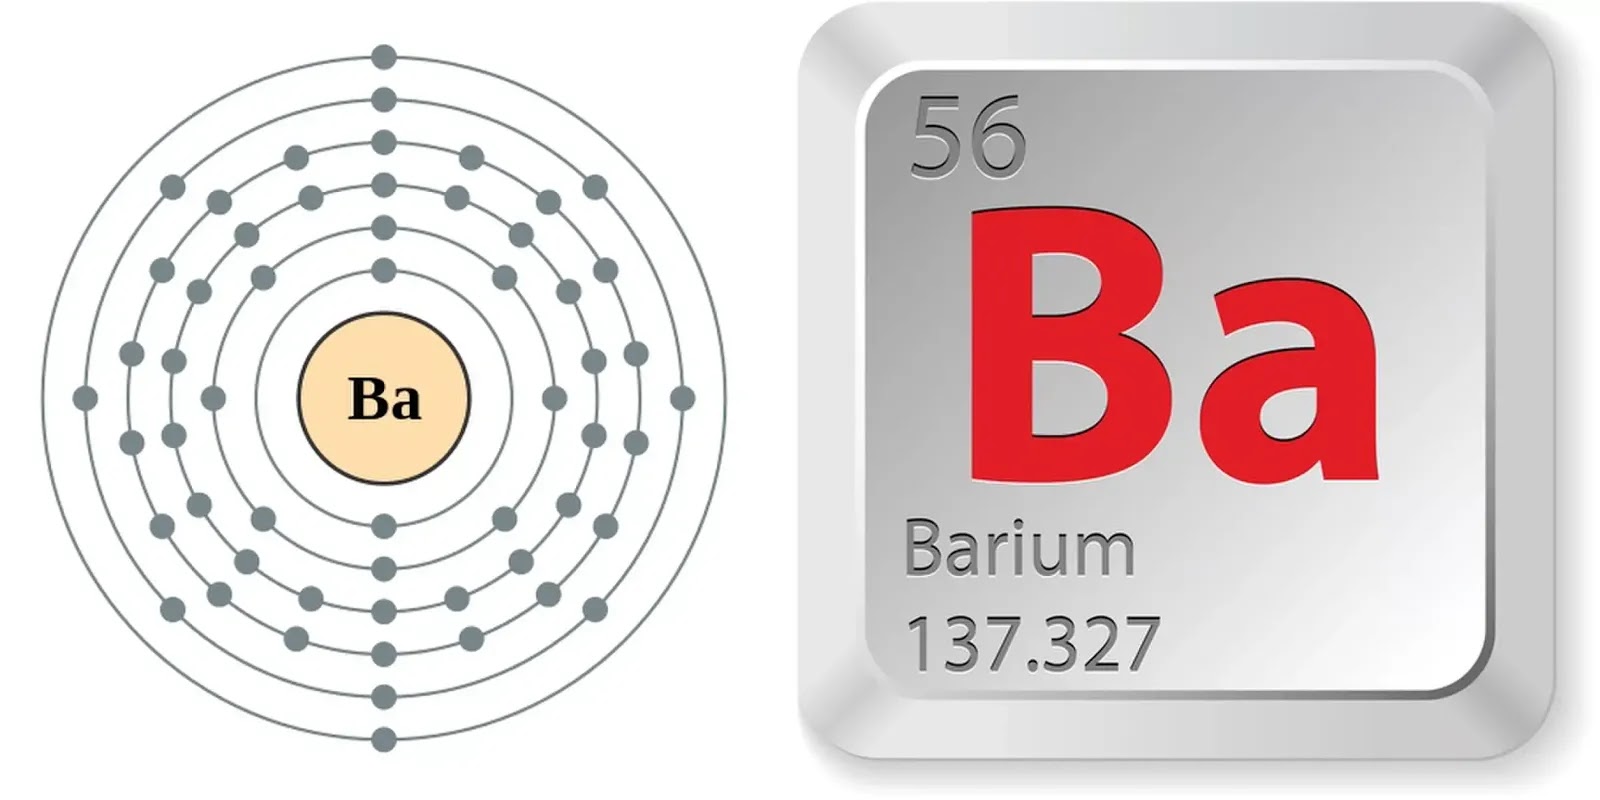 Селен слои электронов. Химические элементы барий Barium. Германий Germanium ge химический элемент. Бром химический элемент. Строение атома элемента германий.